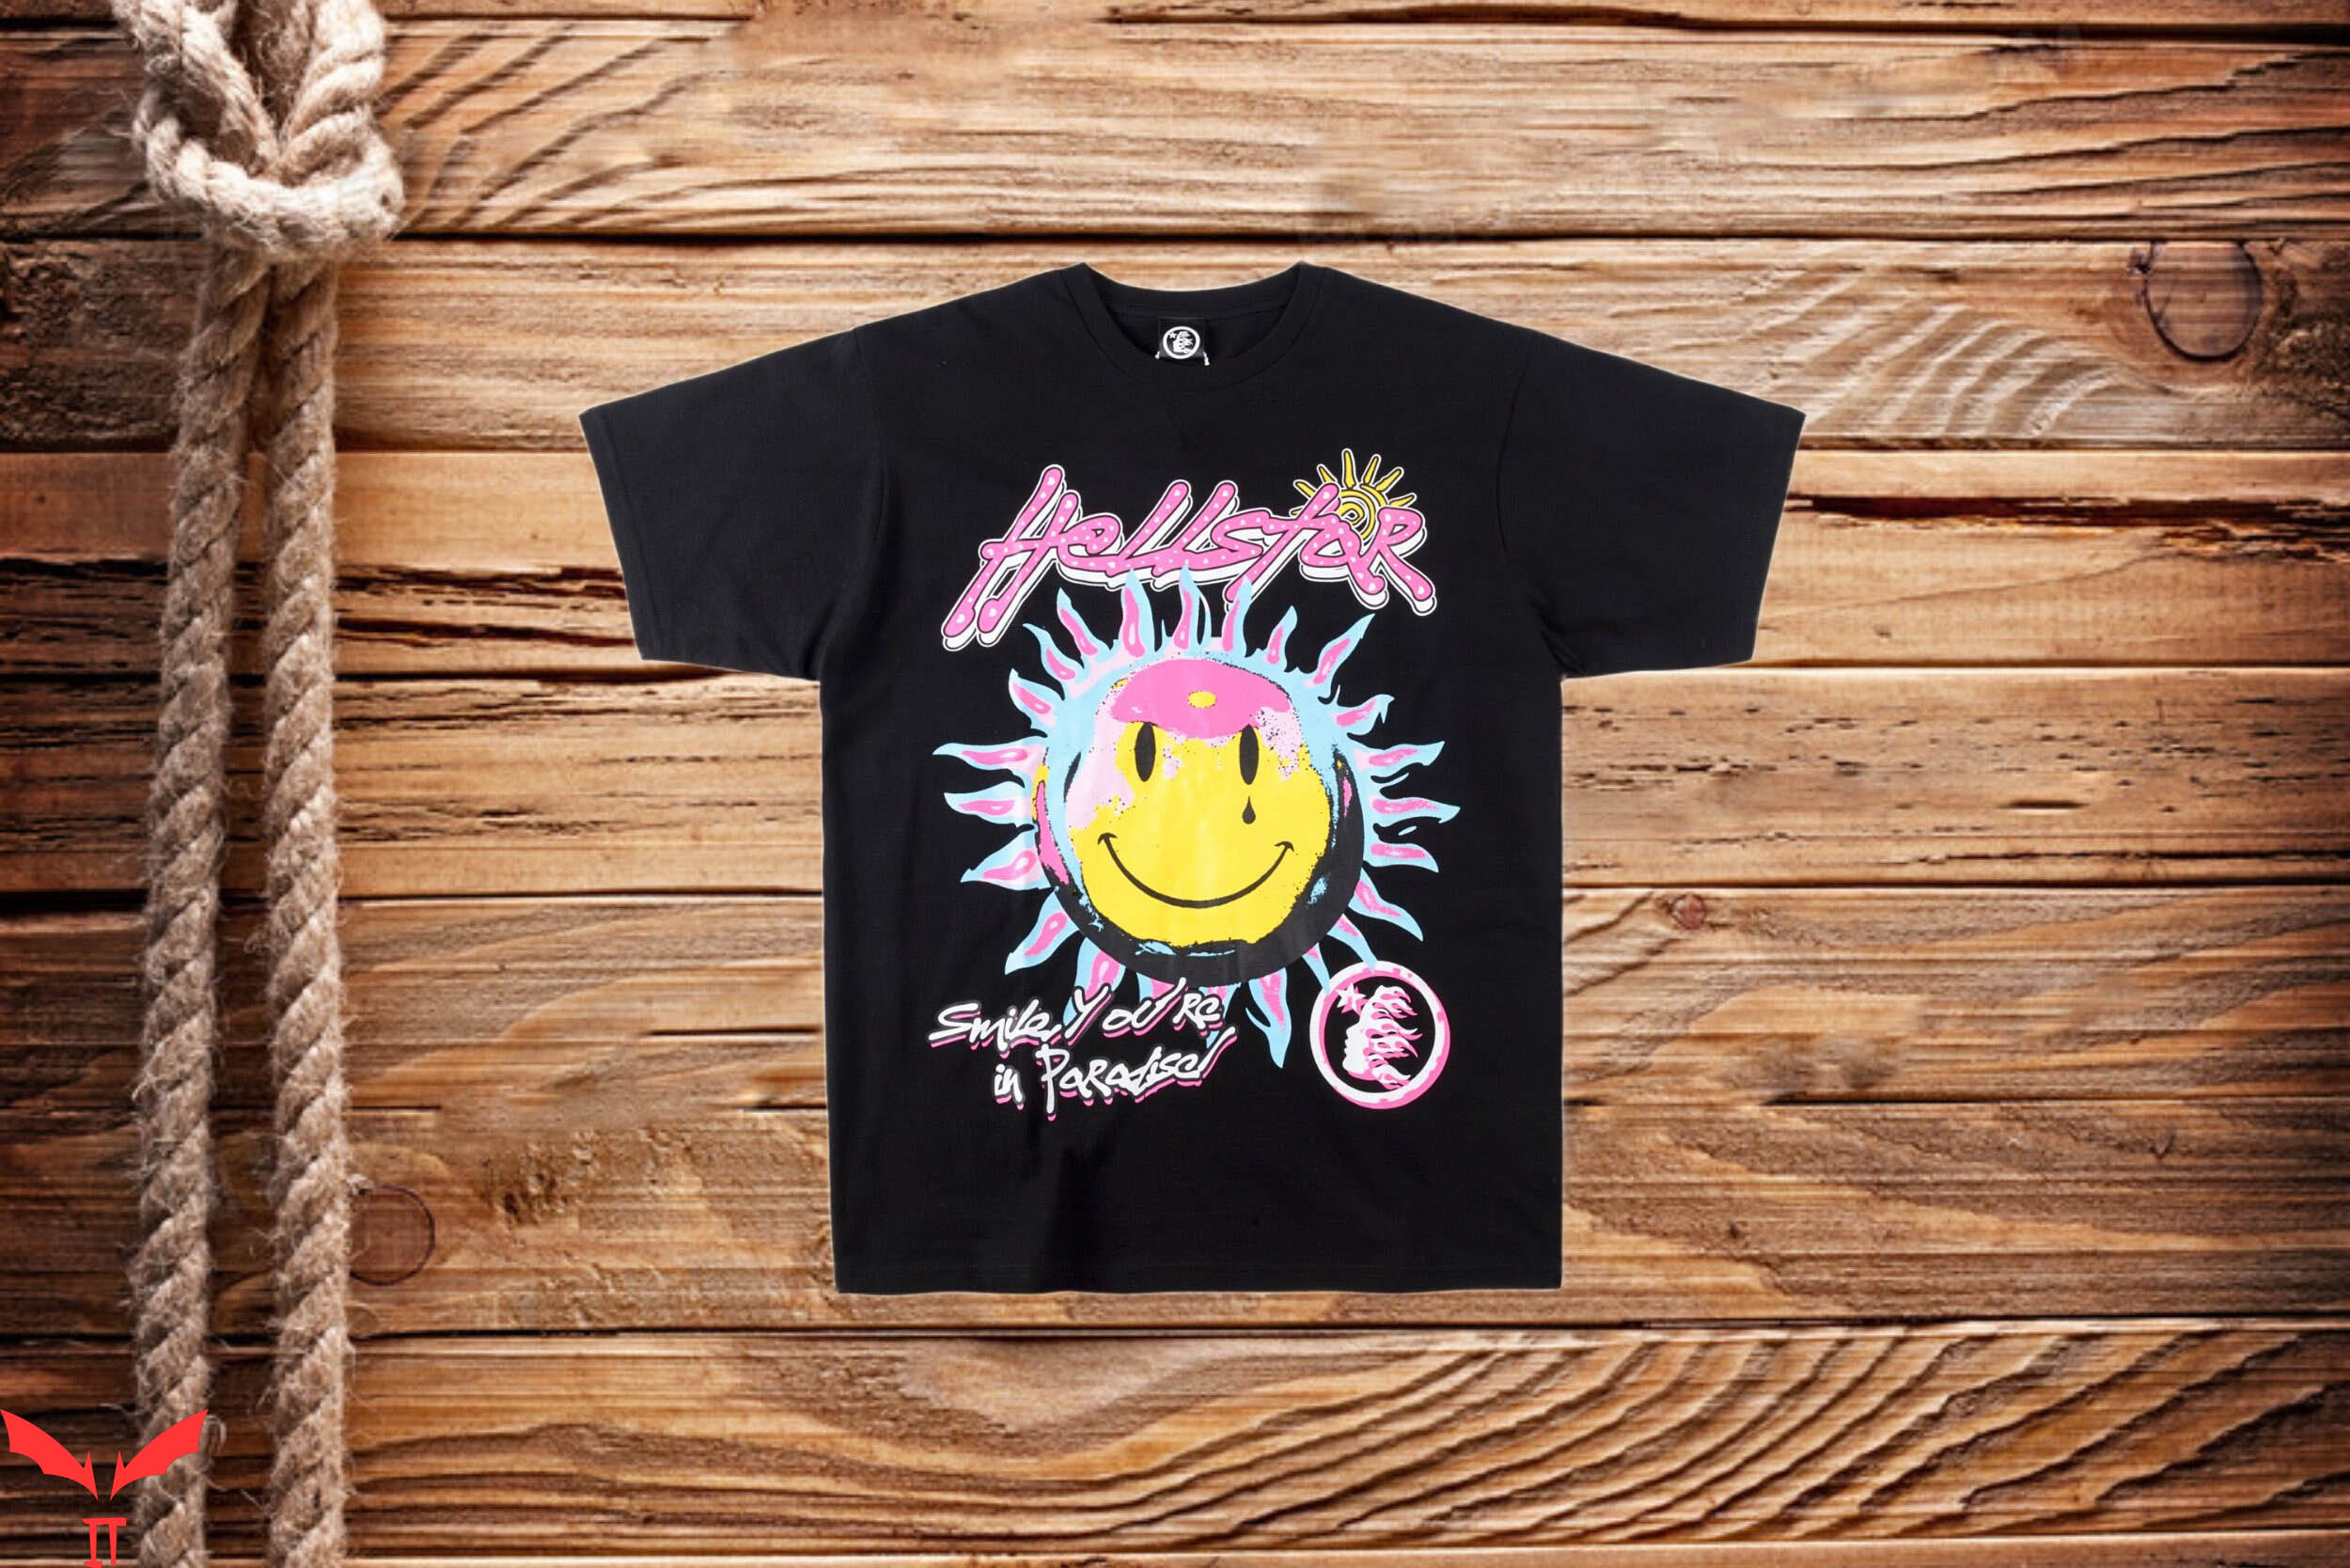 Hell Star T-Shirt Studios For The Sun Trendy Art Vintage